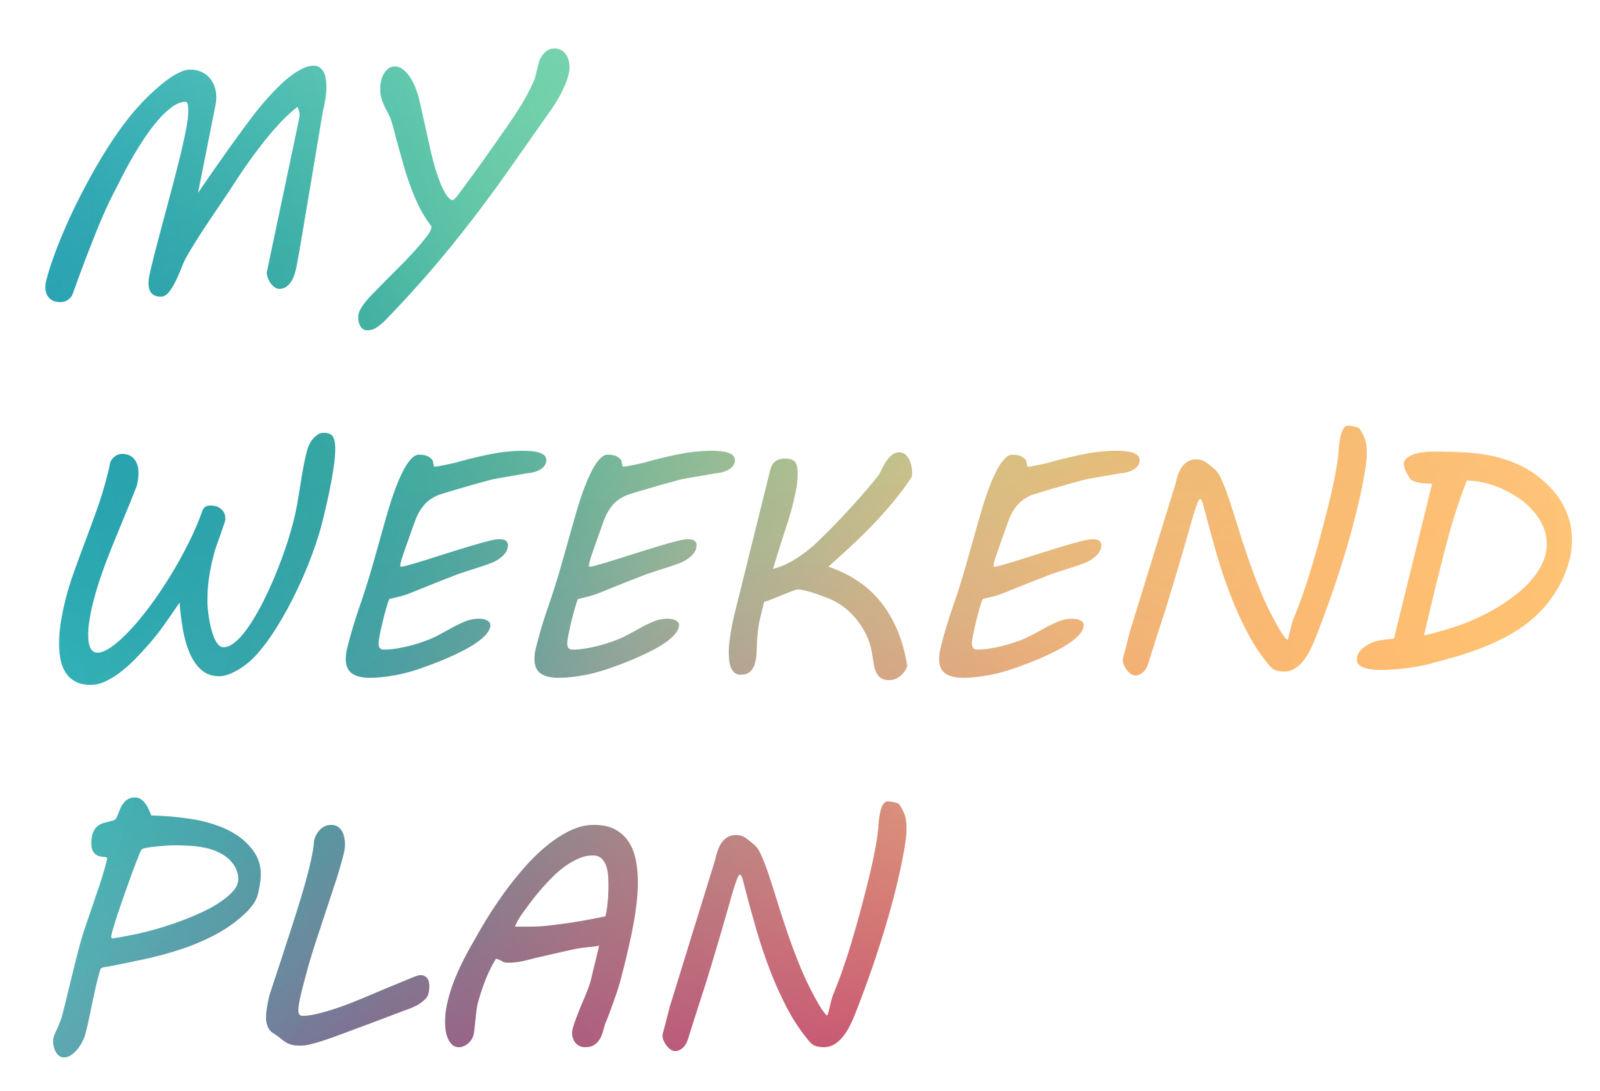 How you spending weekend. My ideal weekend проект. My weekend Plans. Картинки weekend Plan. Weekend английский язык.